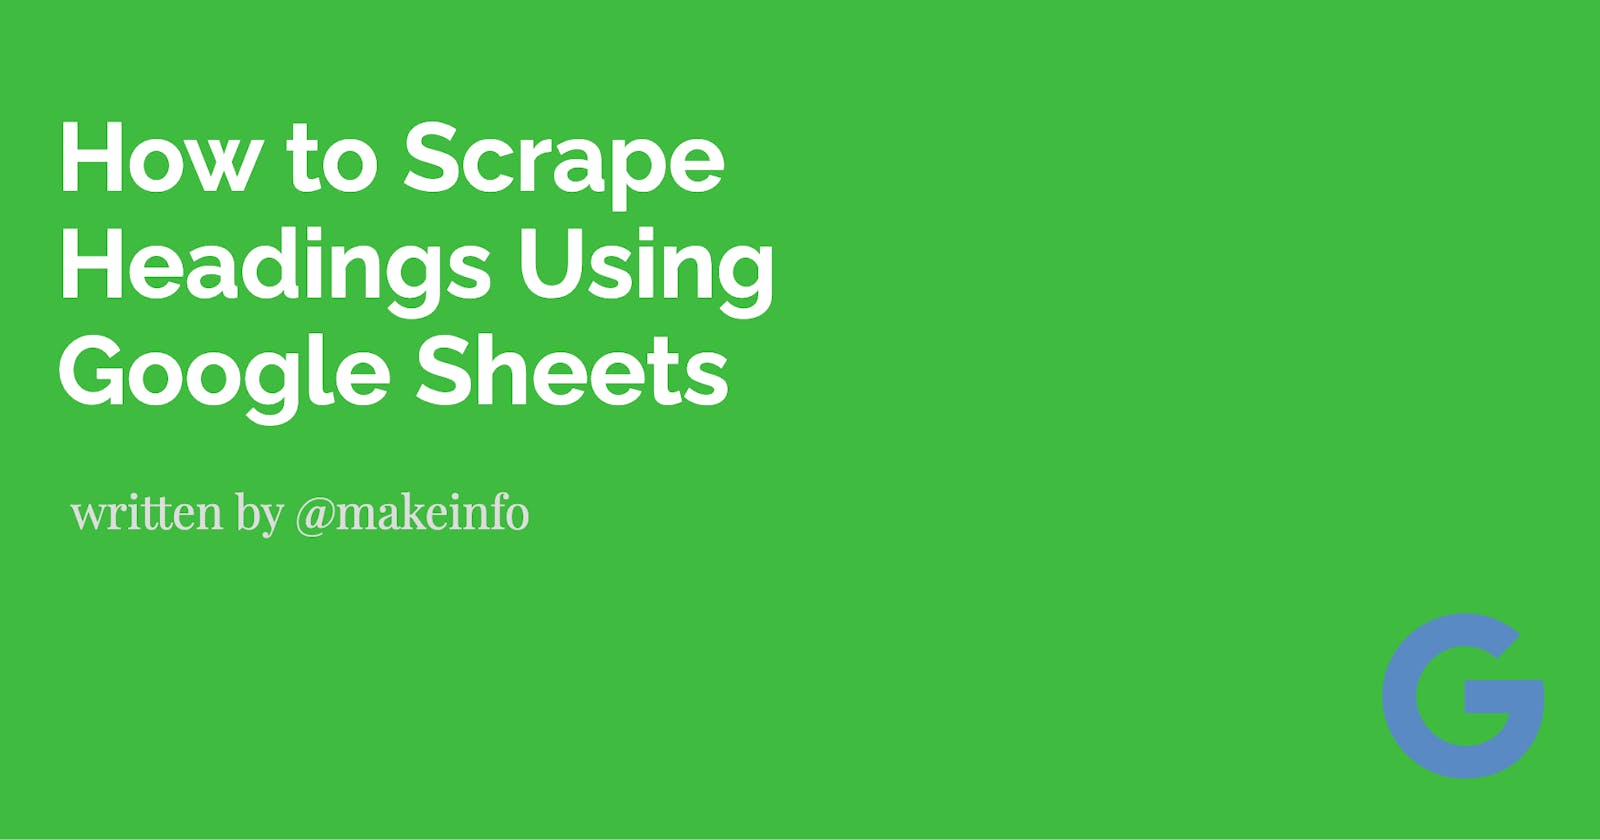 How to Scrape Website Headings Using Google Sheets